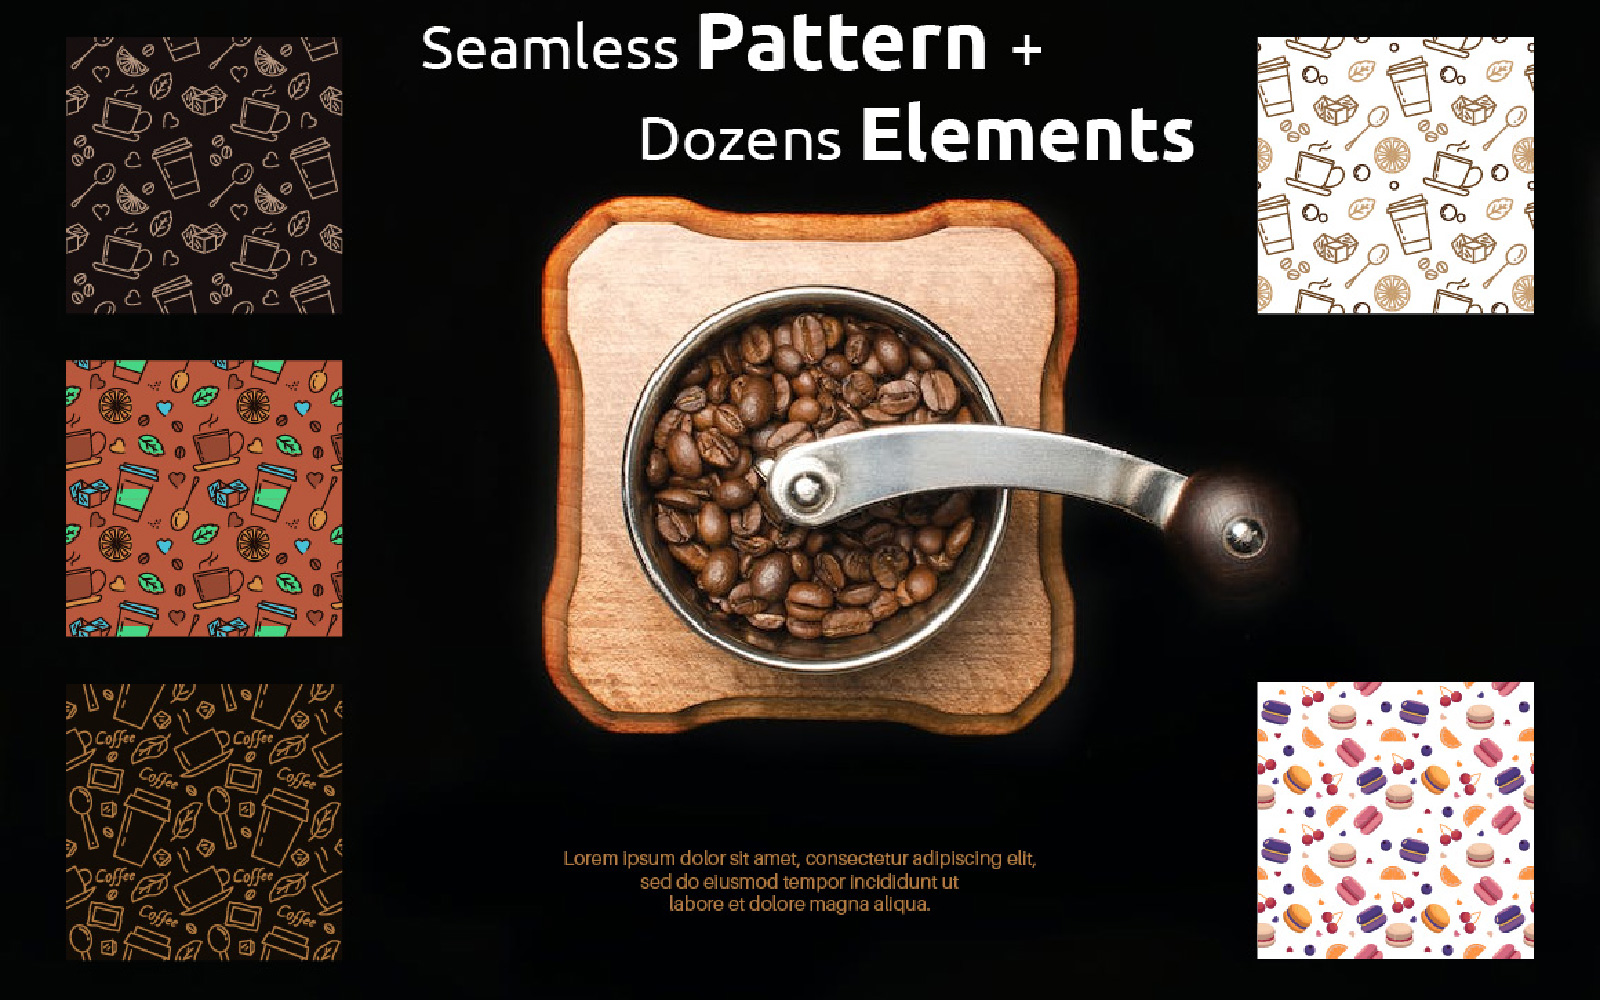 Seamless Pattern + Dozens Elements